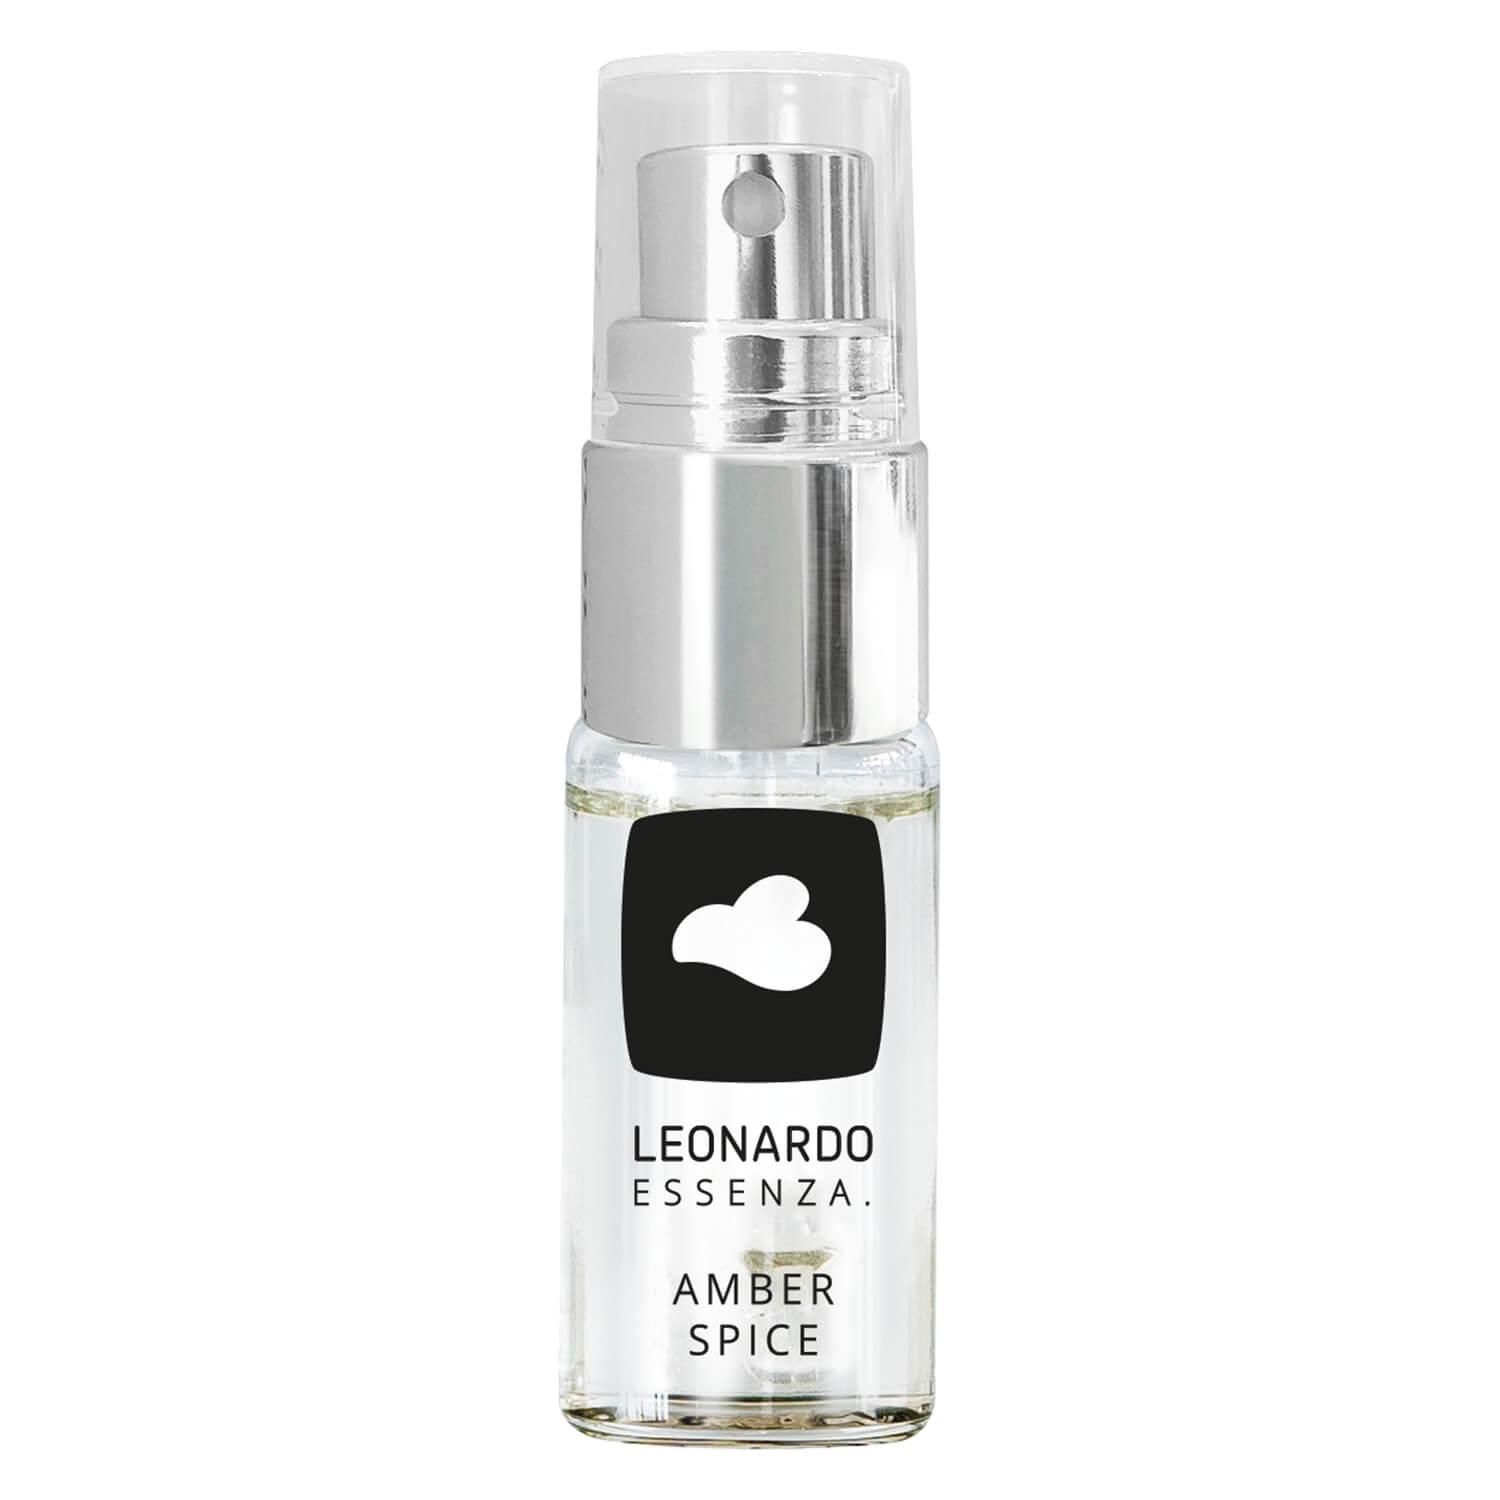 LEONARDO ESSENZA - Fragrance Amber Spice